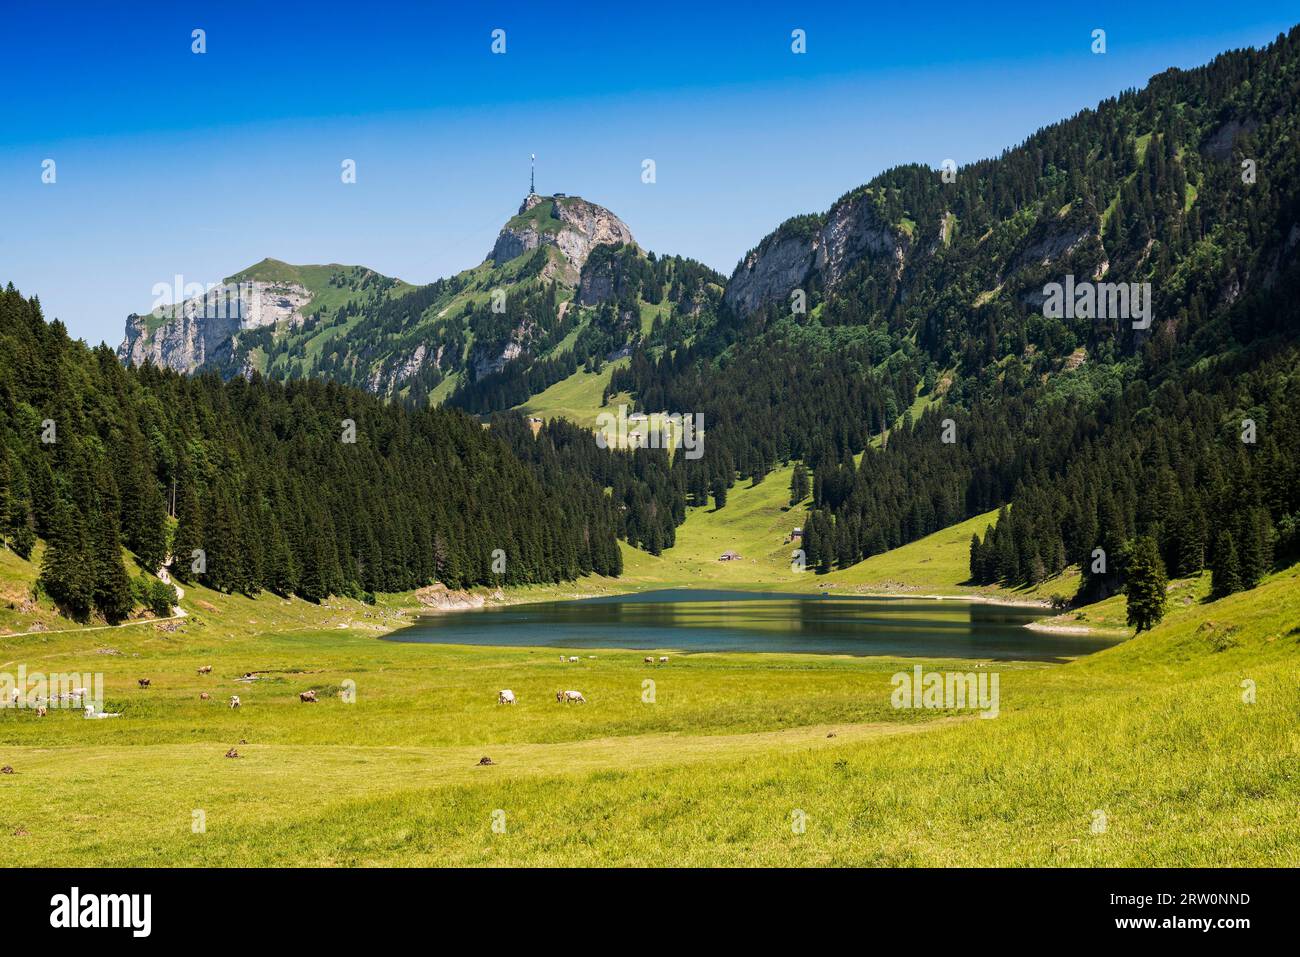 Mountain landscape and lake, Lake Saemtis, Hoher Kasten, Alpstein, Appenzell Alps, Canton Appenzell Innerrhoden, Switzerland Stock Photo